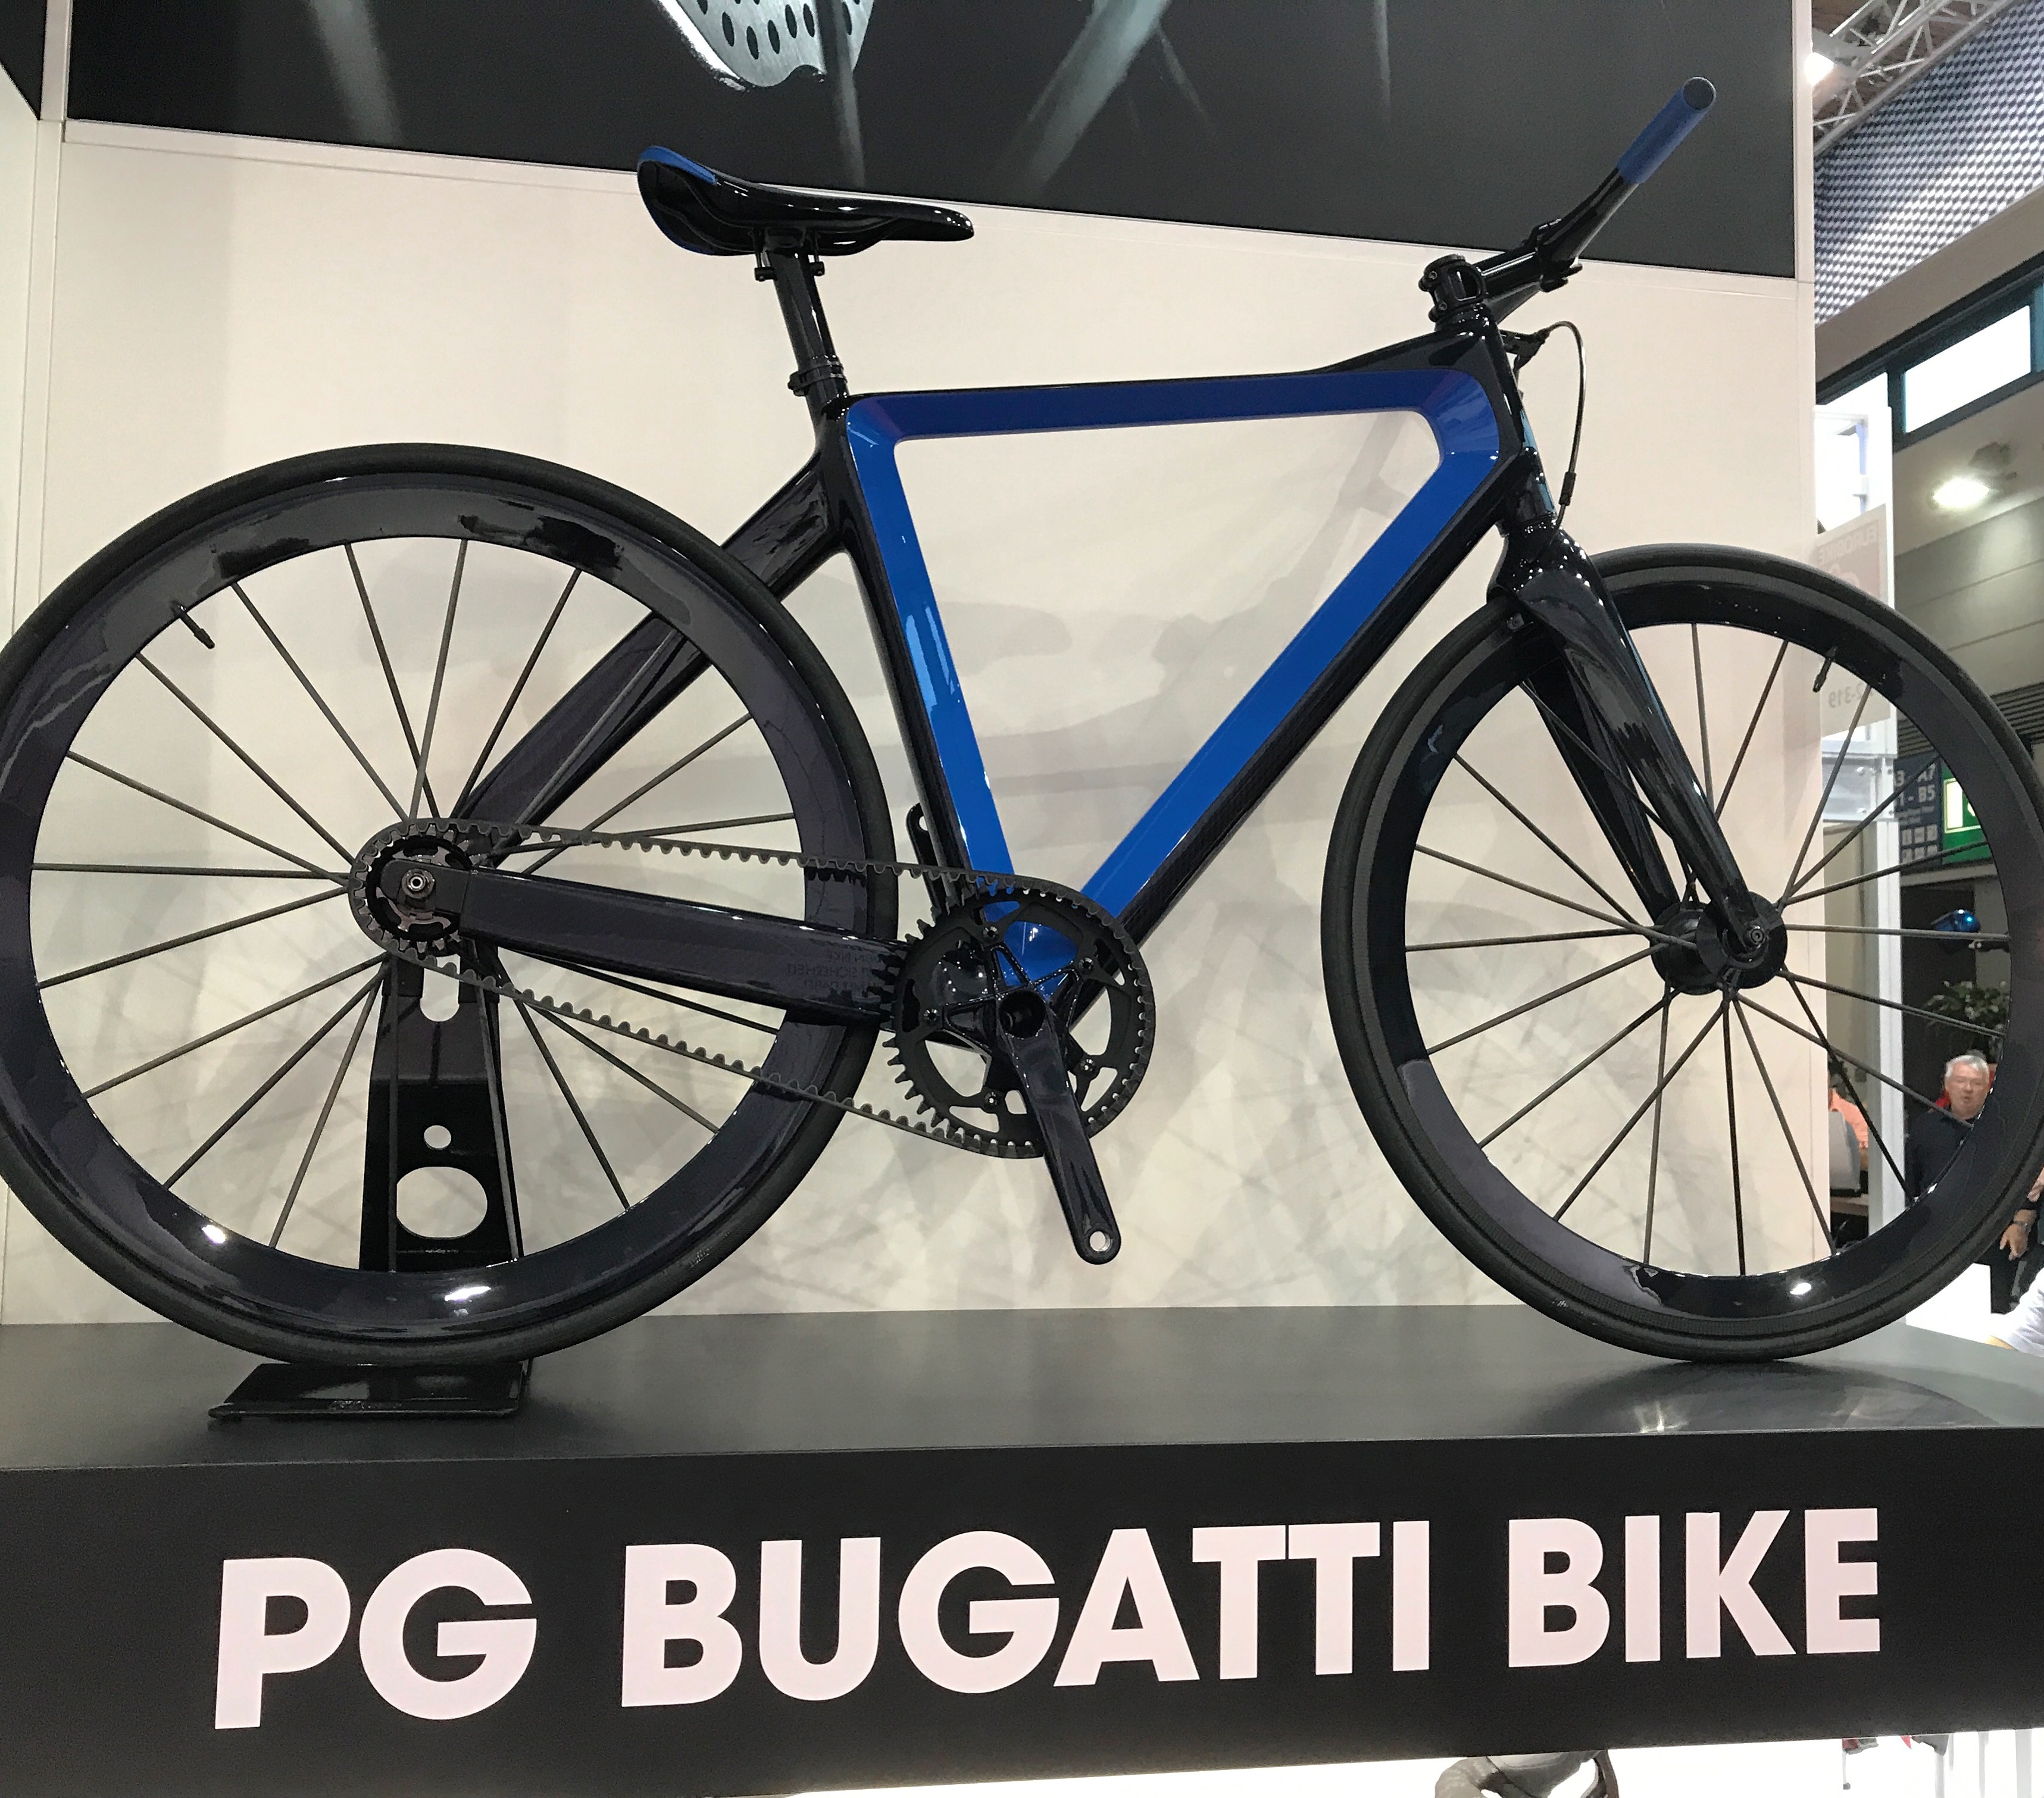 pg bugatti bicycle price